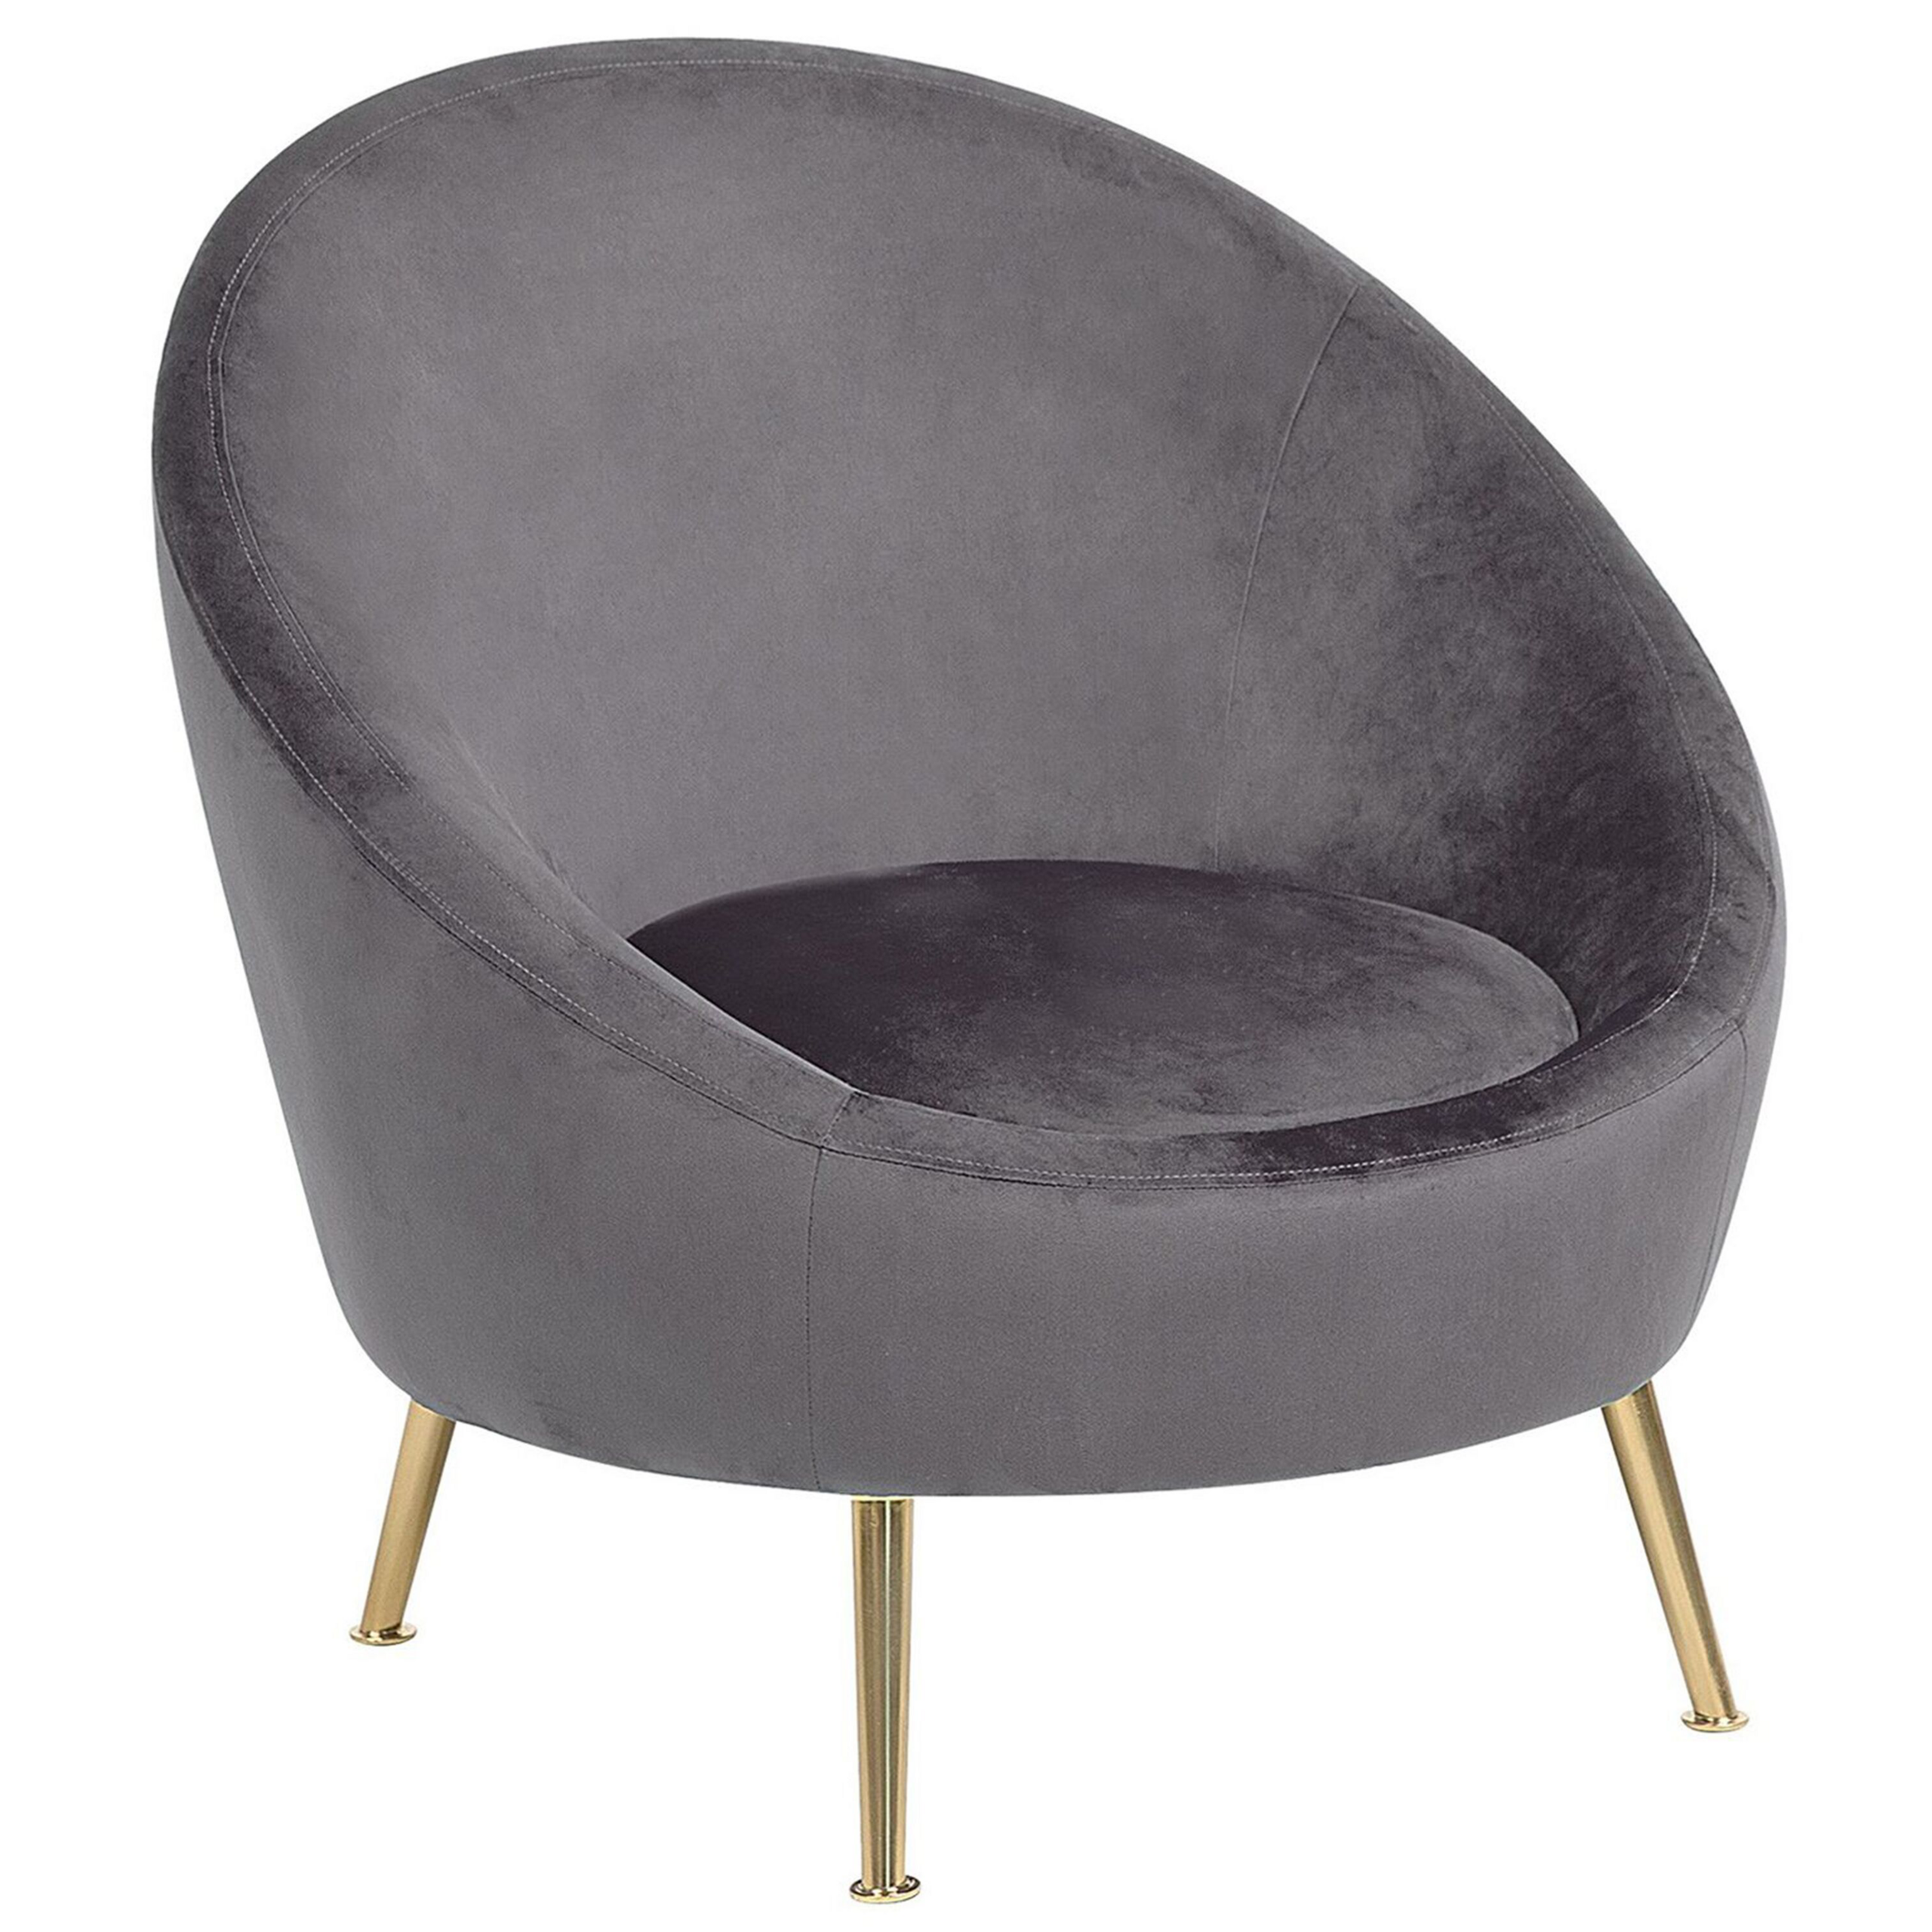 Beliani Tub Chair Grey Velvet 76L x 80W x 81H cm Accent Gold Legs Glam Retro